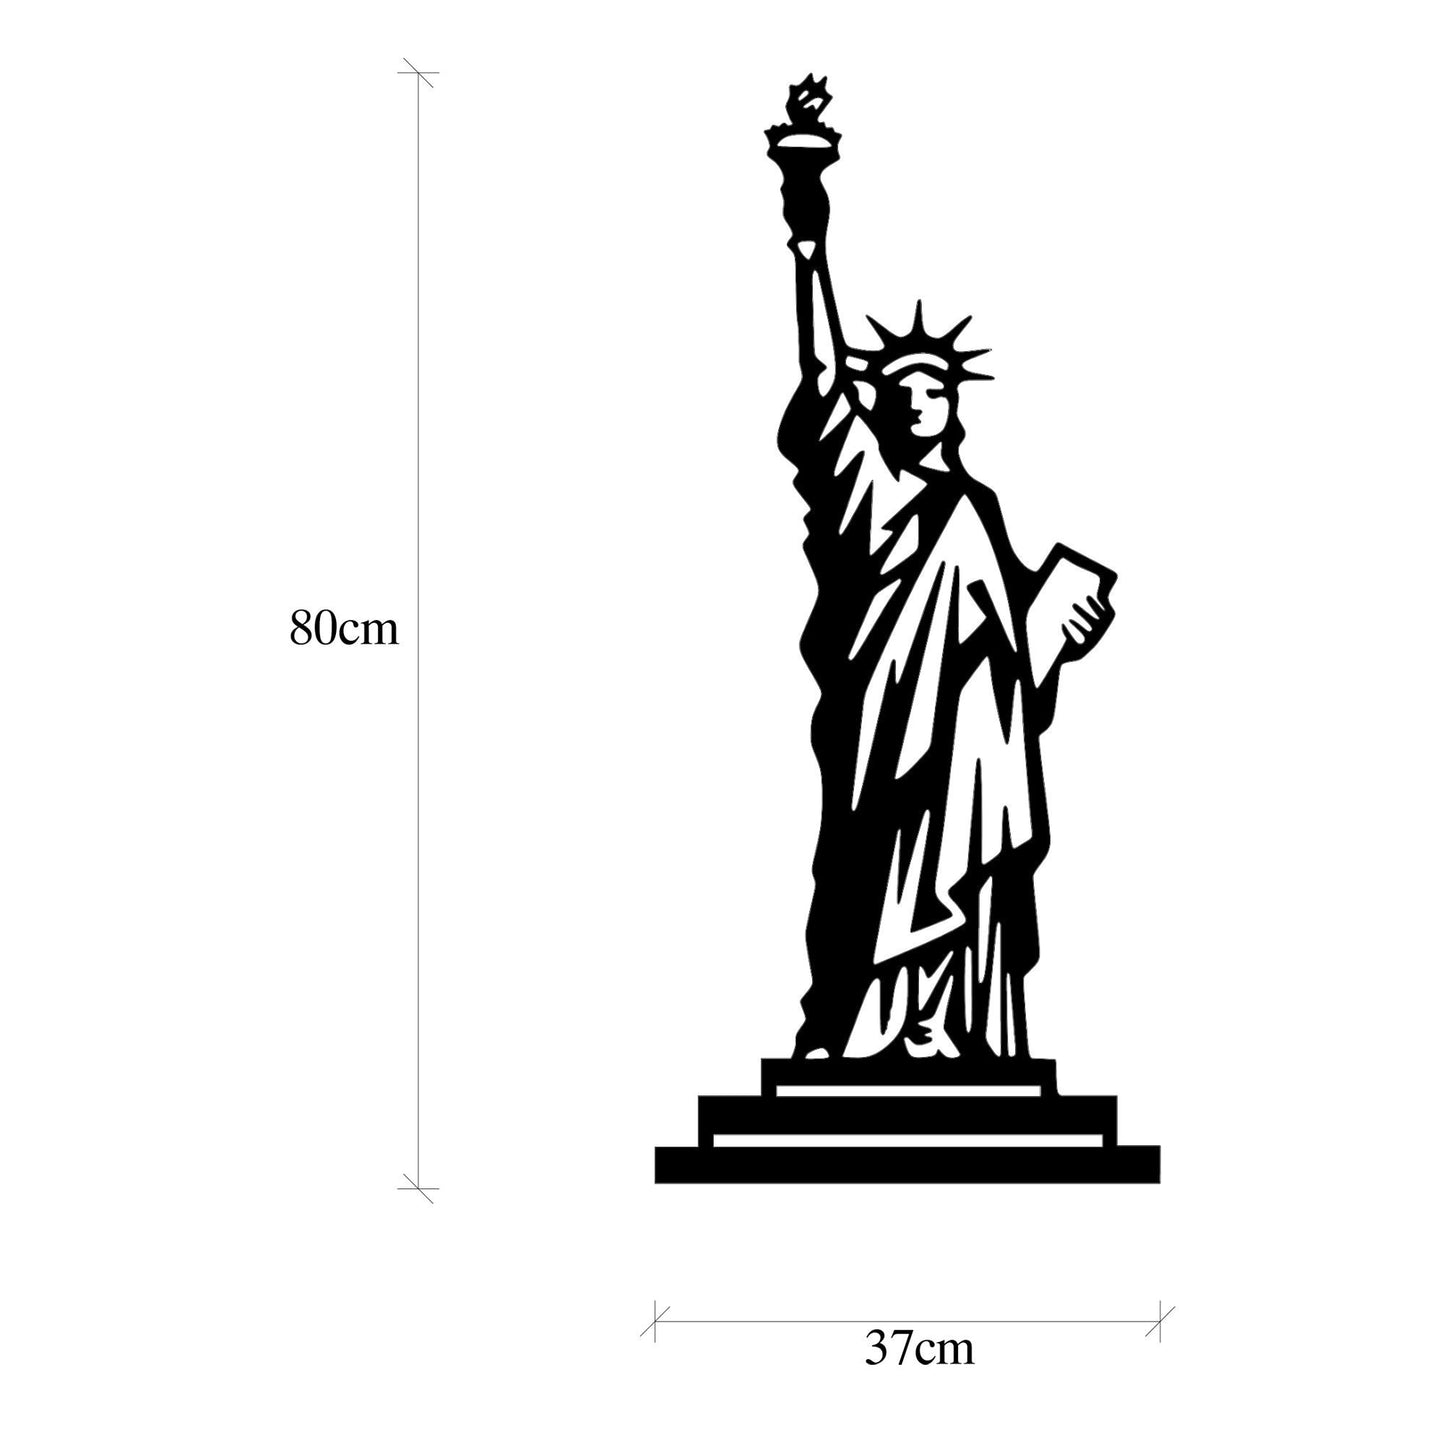 Statue Of Liberty - Decorative Metal Wall Accessory